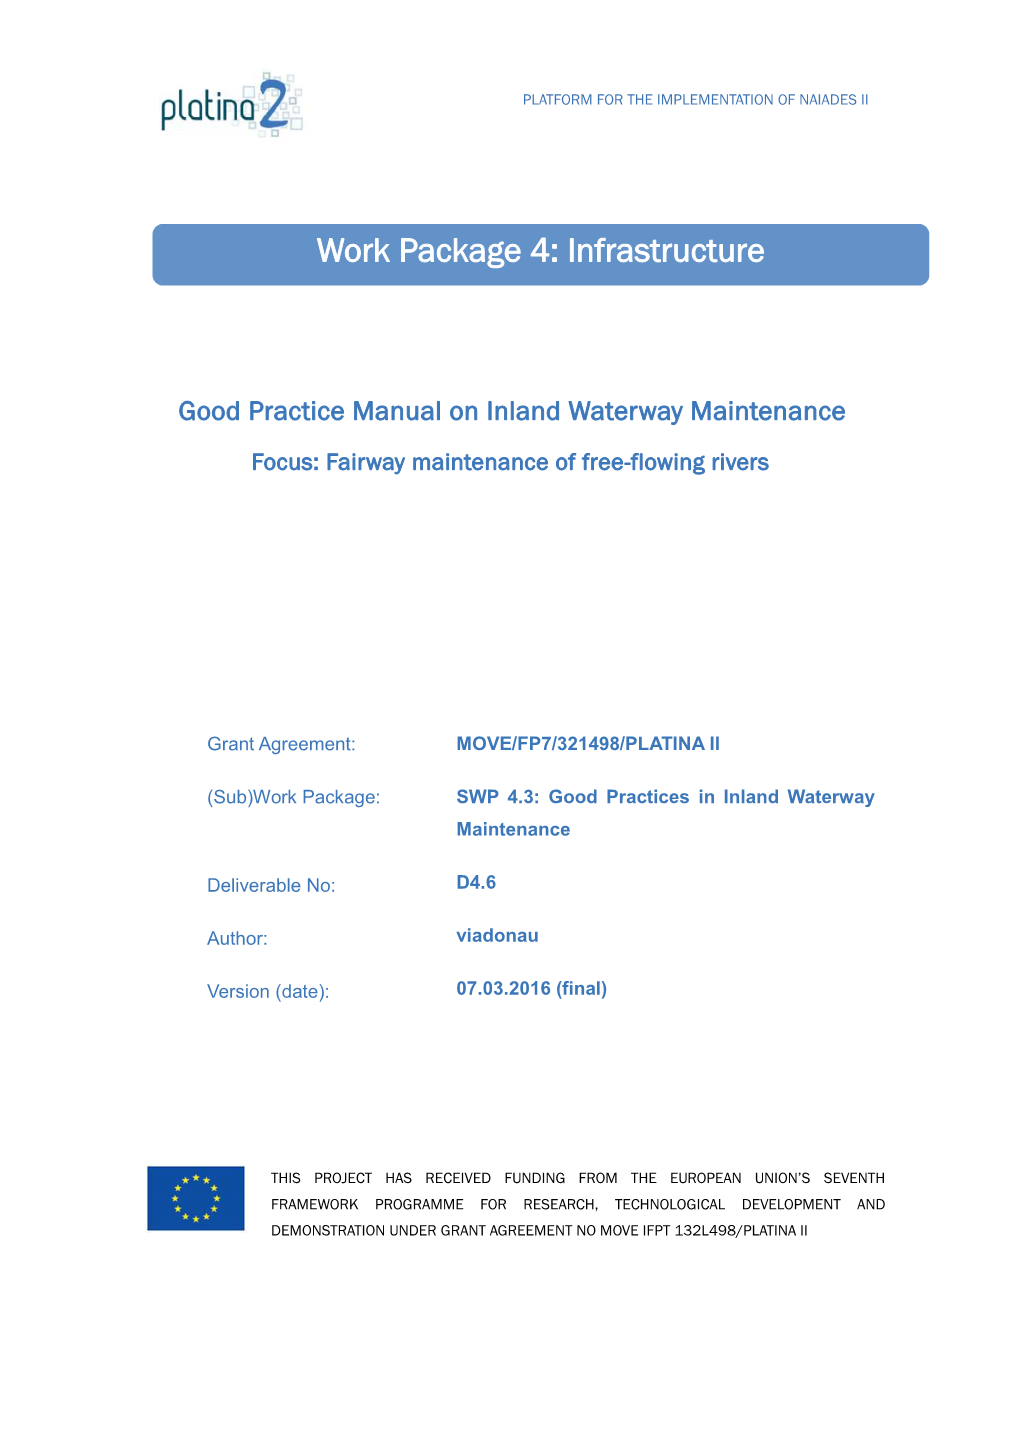 Good Practice Manual on Inland Waterway Maintenance